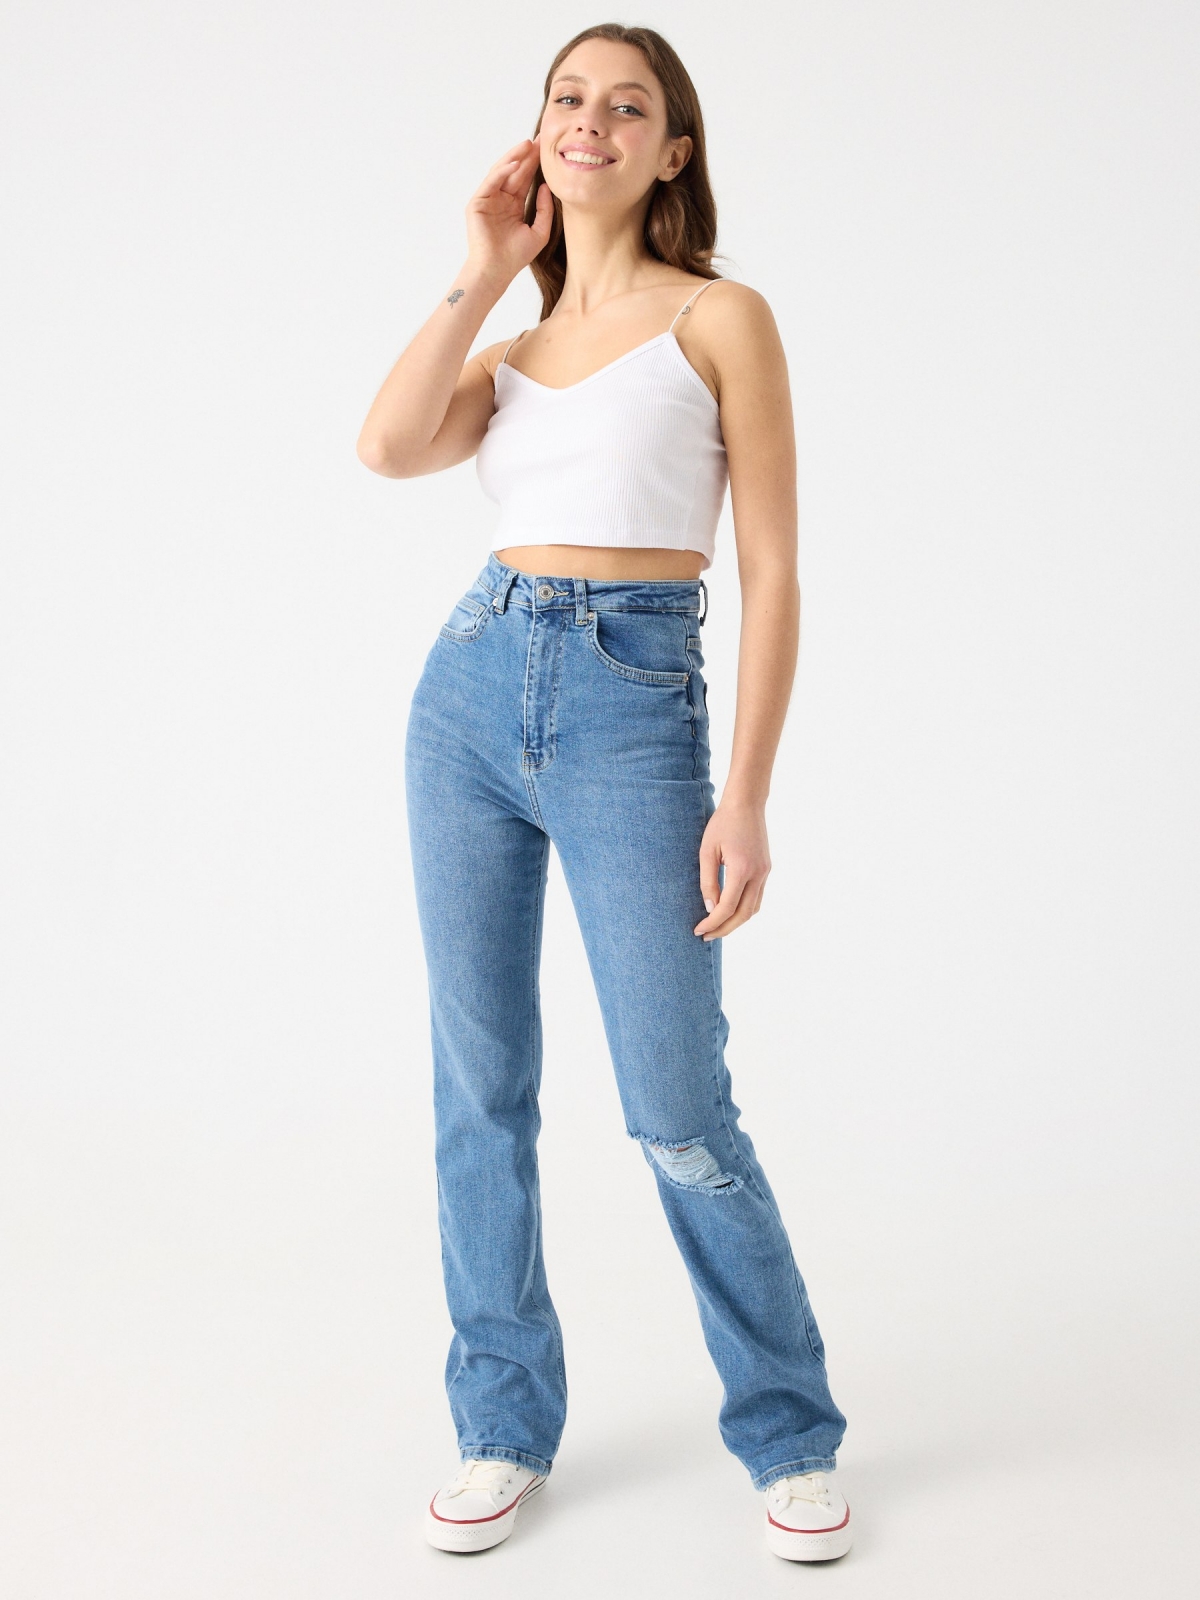 Jeans reta de cintura alta rasgada azul vista geral frontal